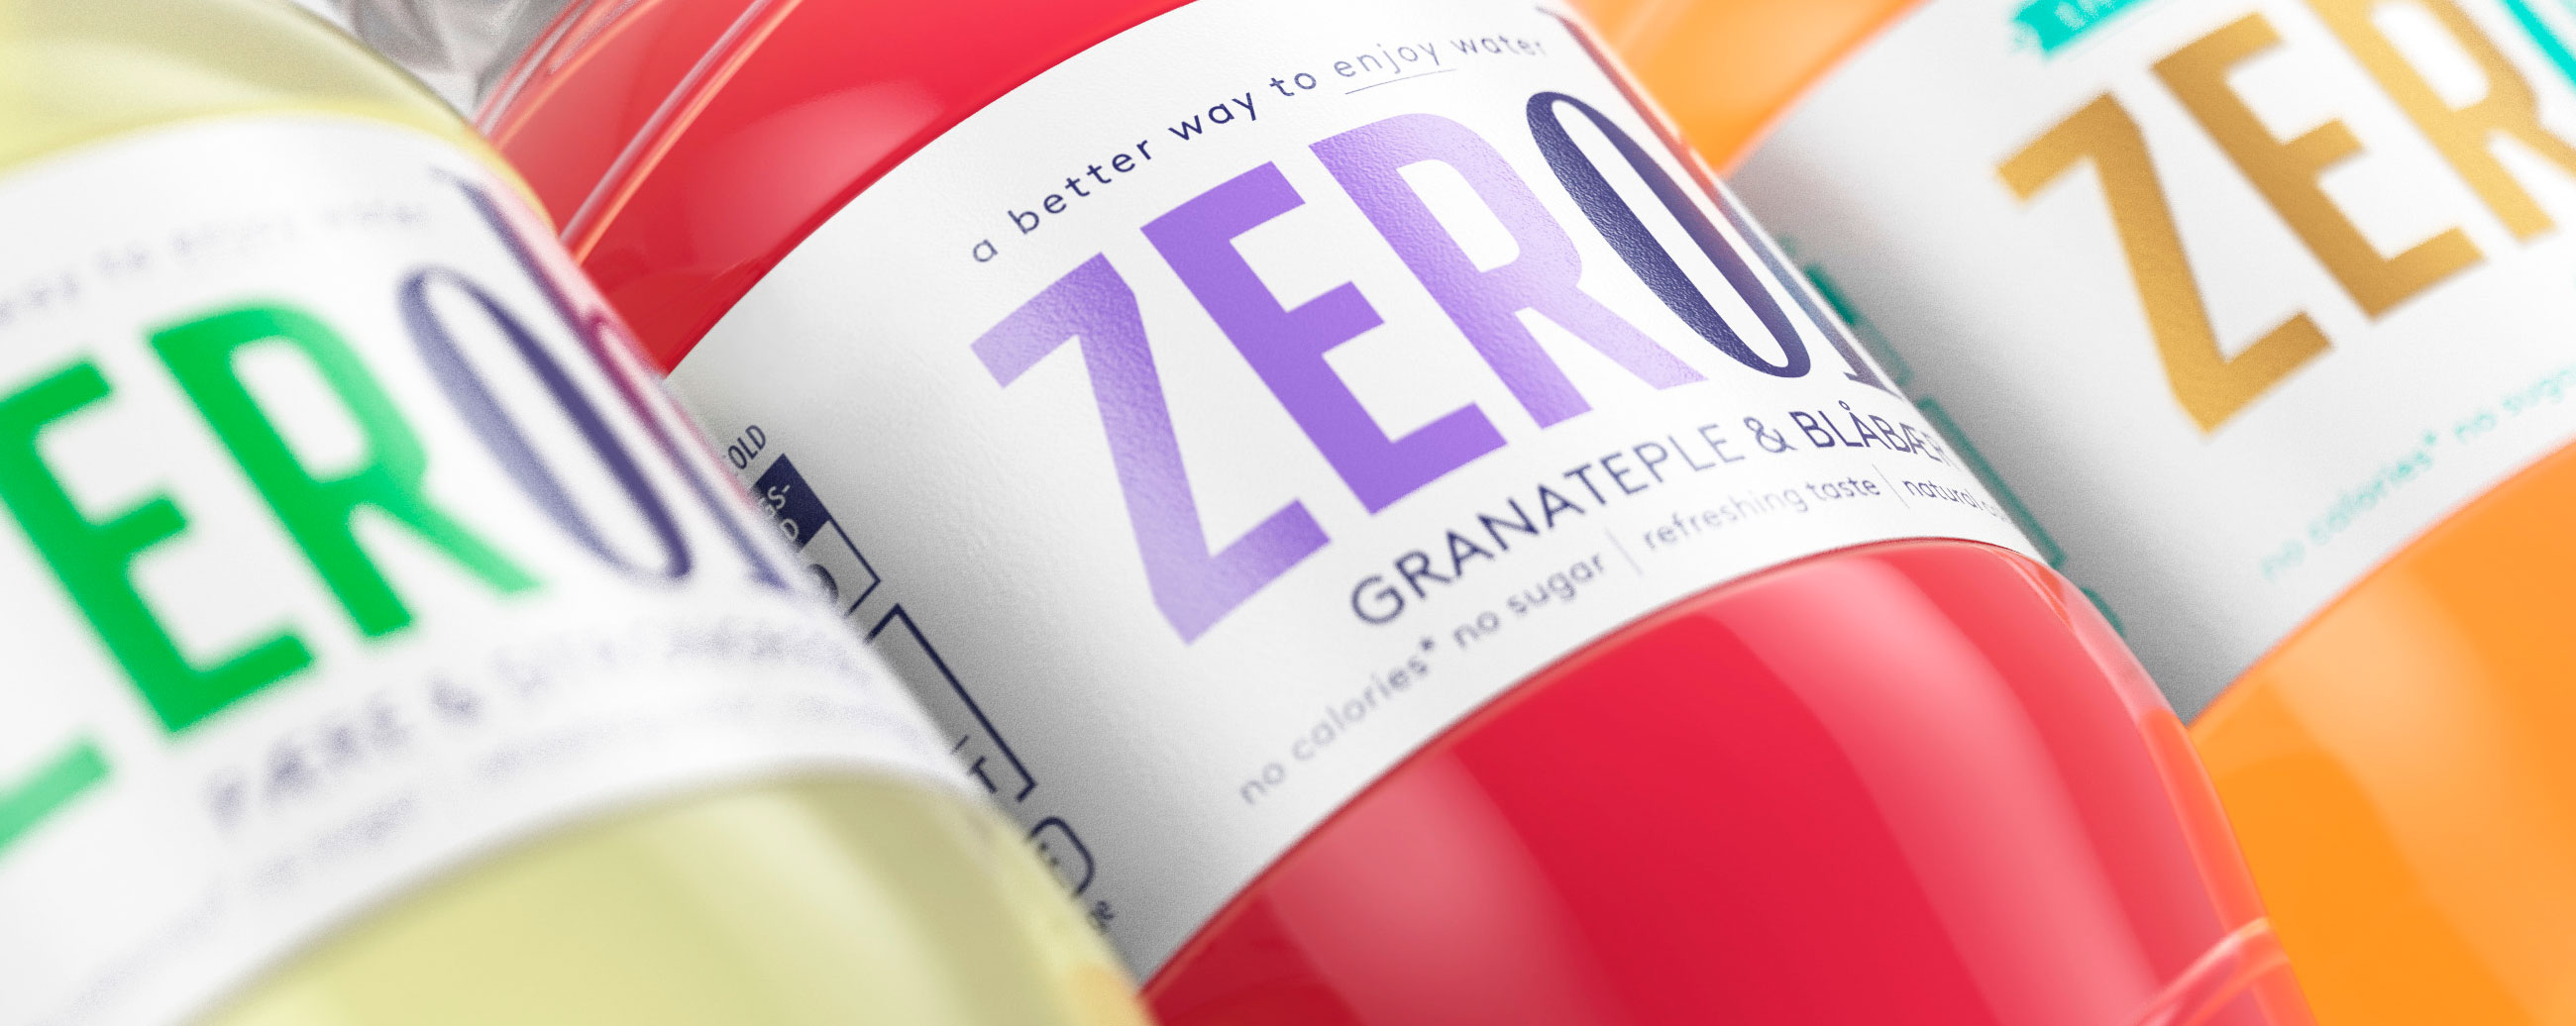 Lerum Zeroh saft Granateple & blåbær. Emballasje packaging design.